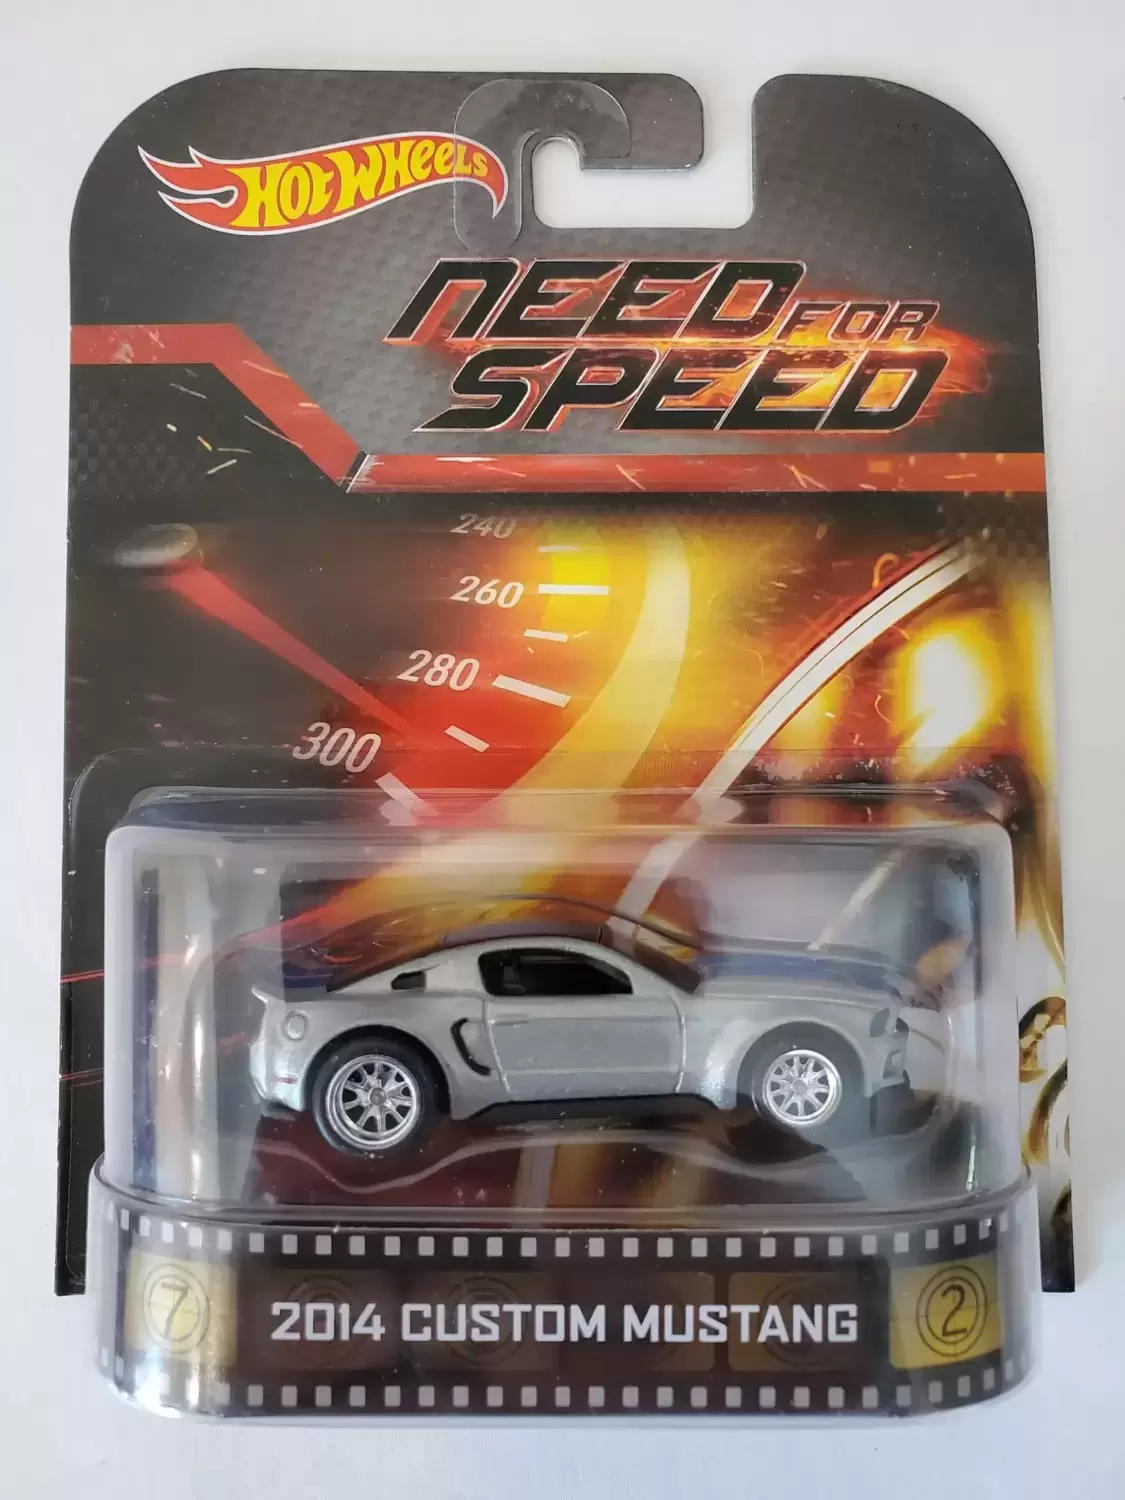 Retro Entertainment Hot Wheels - Need for Speed - 2014 Custom Mustang